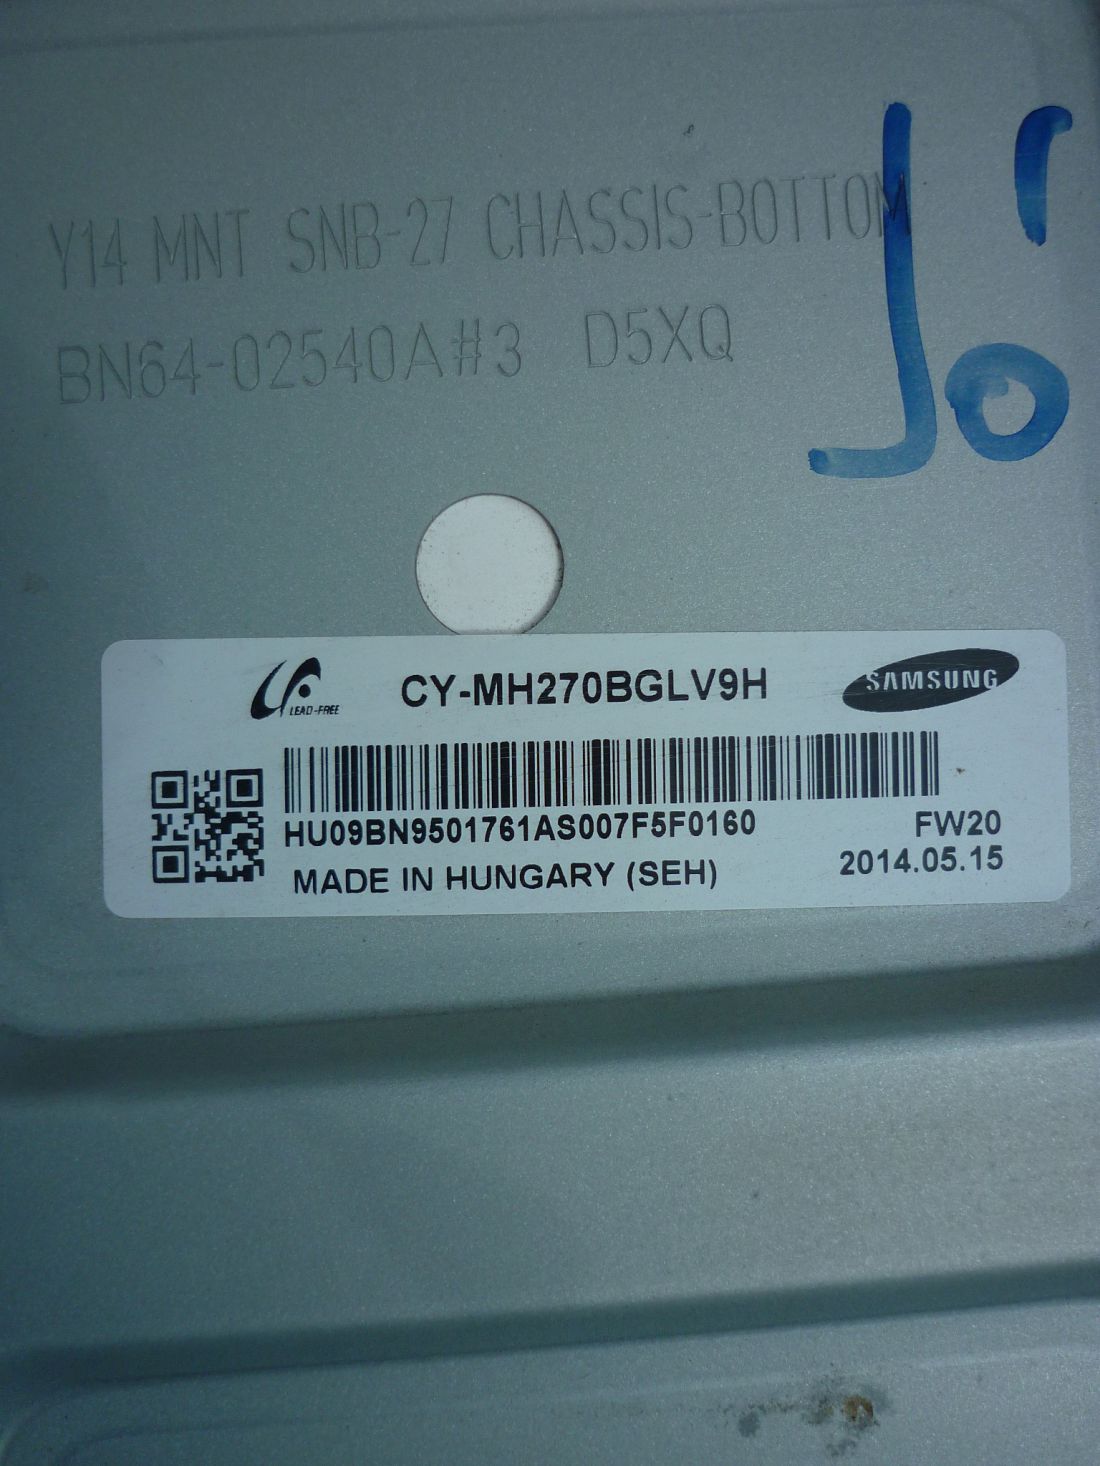 CY-MH270BGLV9H